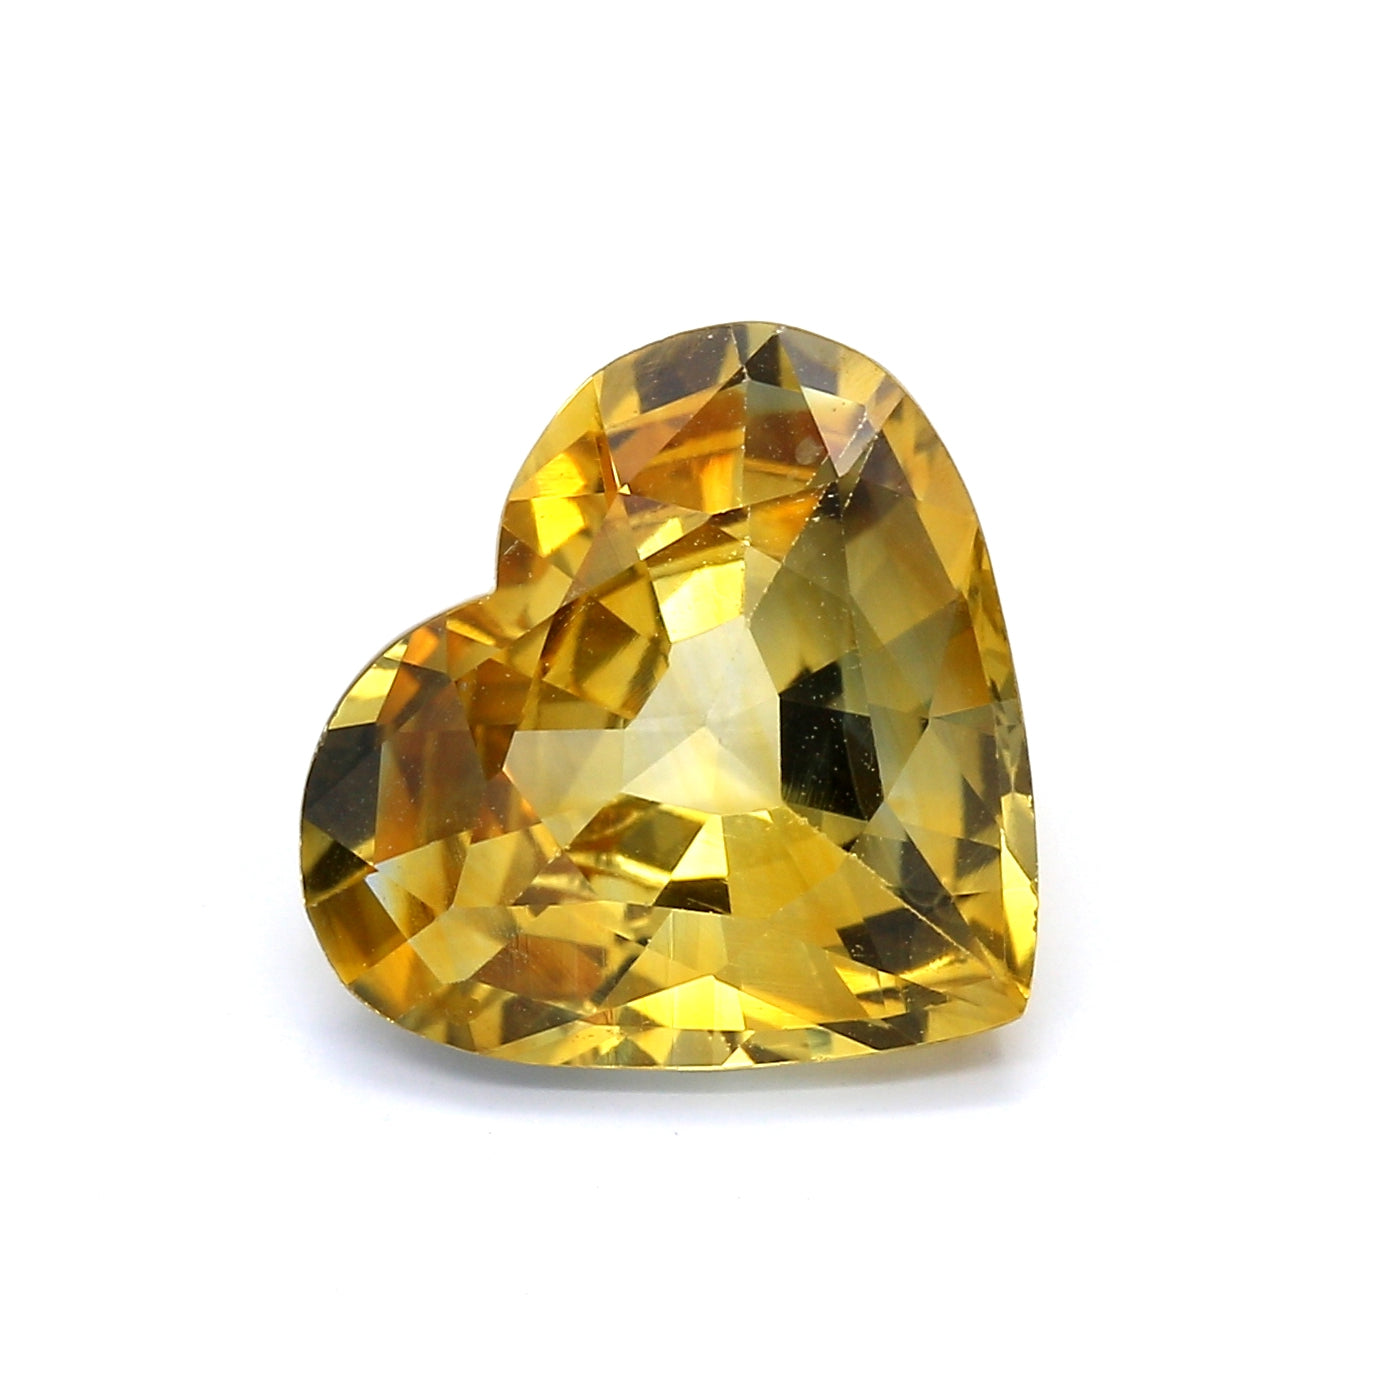 7.87ct Yellow, Heart Shape Sapphire, Heated, Sri Lanka - 12.72 x 14.21 x 6.17mm